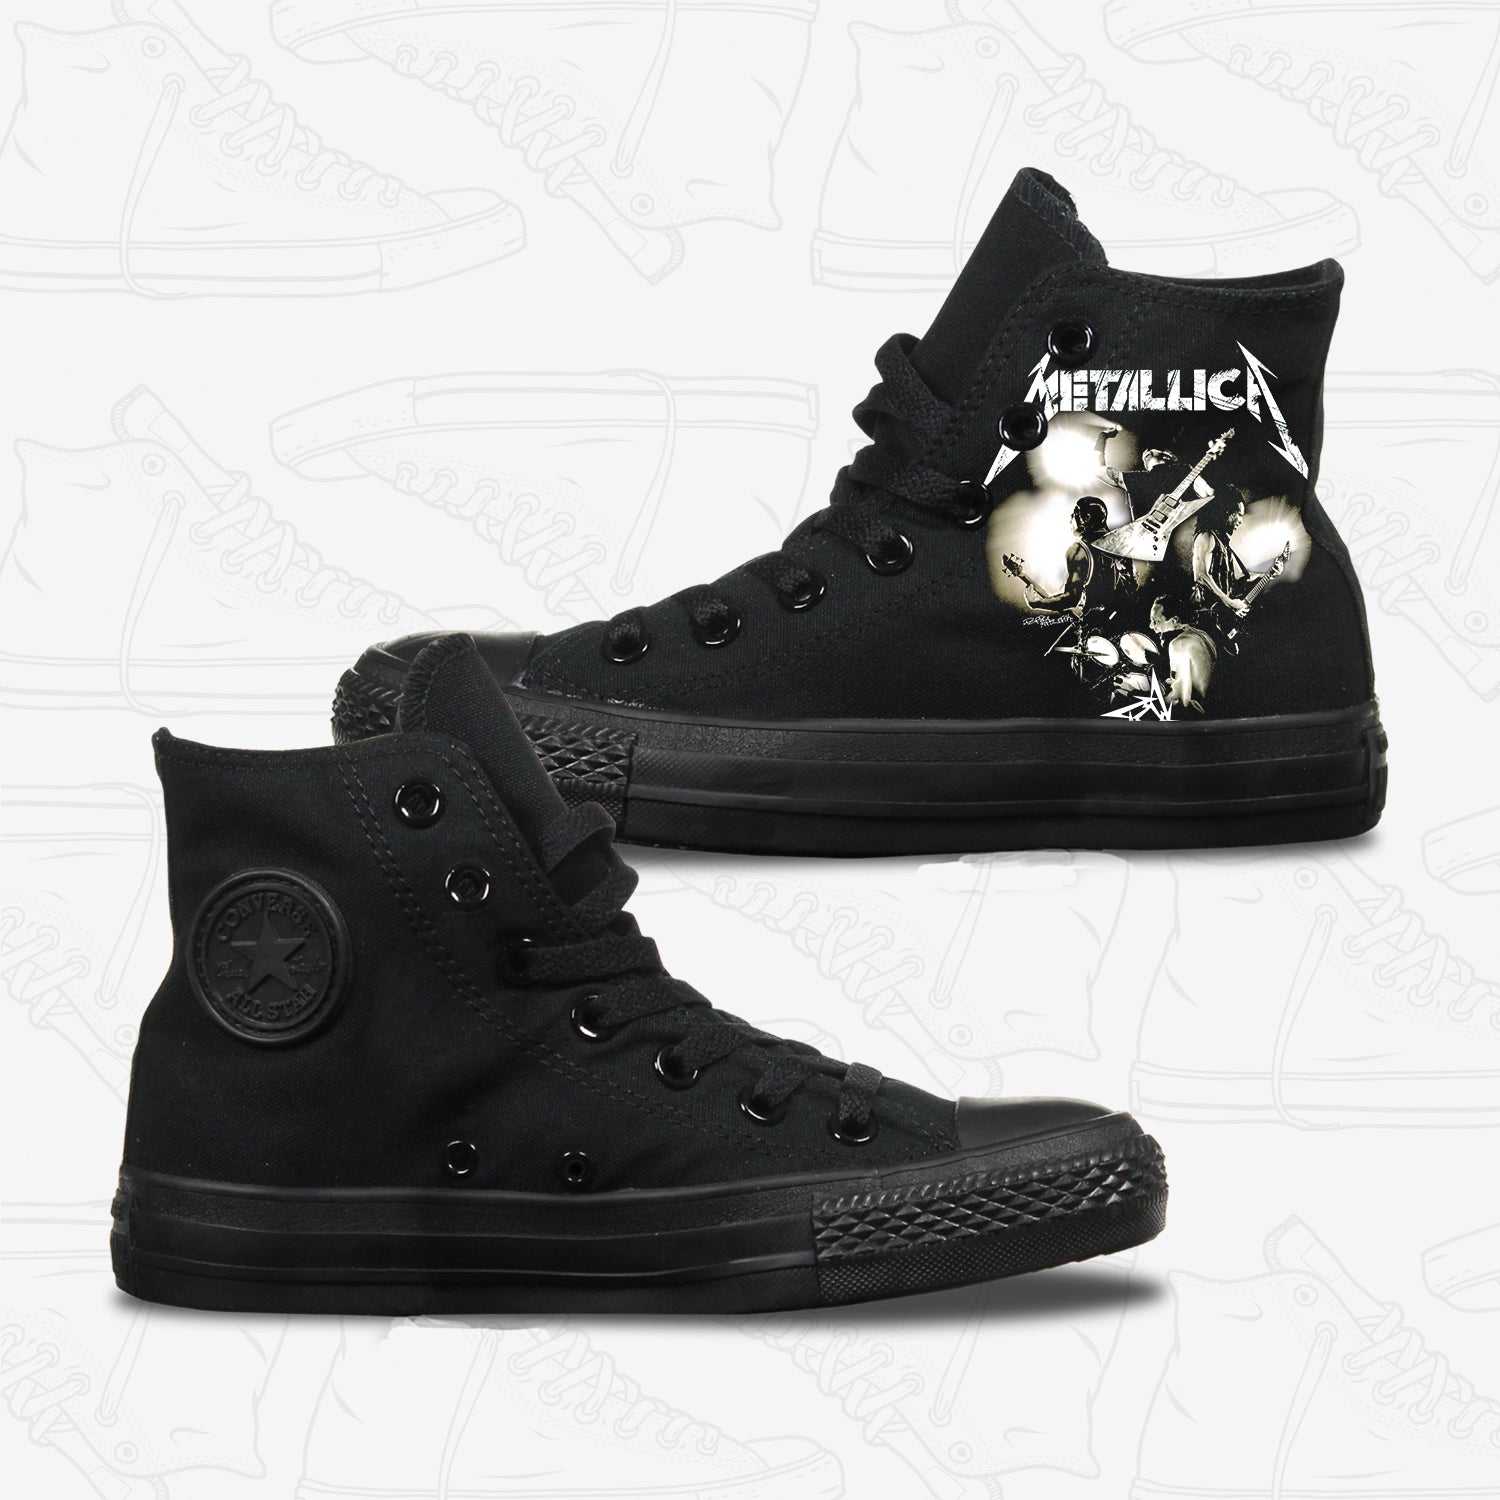 Converse Custom Metallica Adult Shoes 